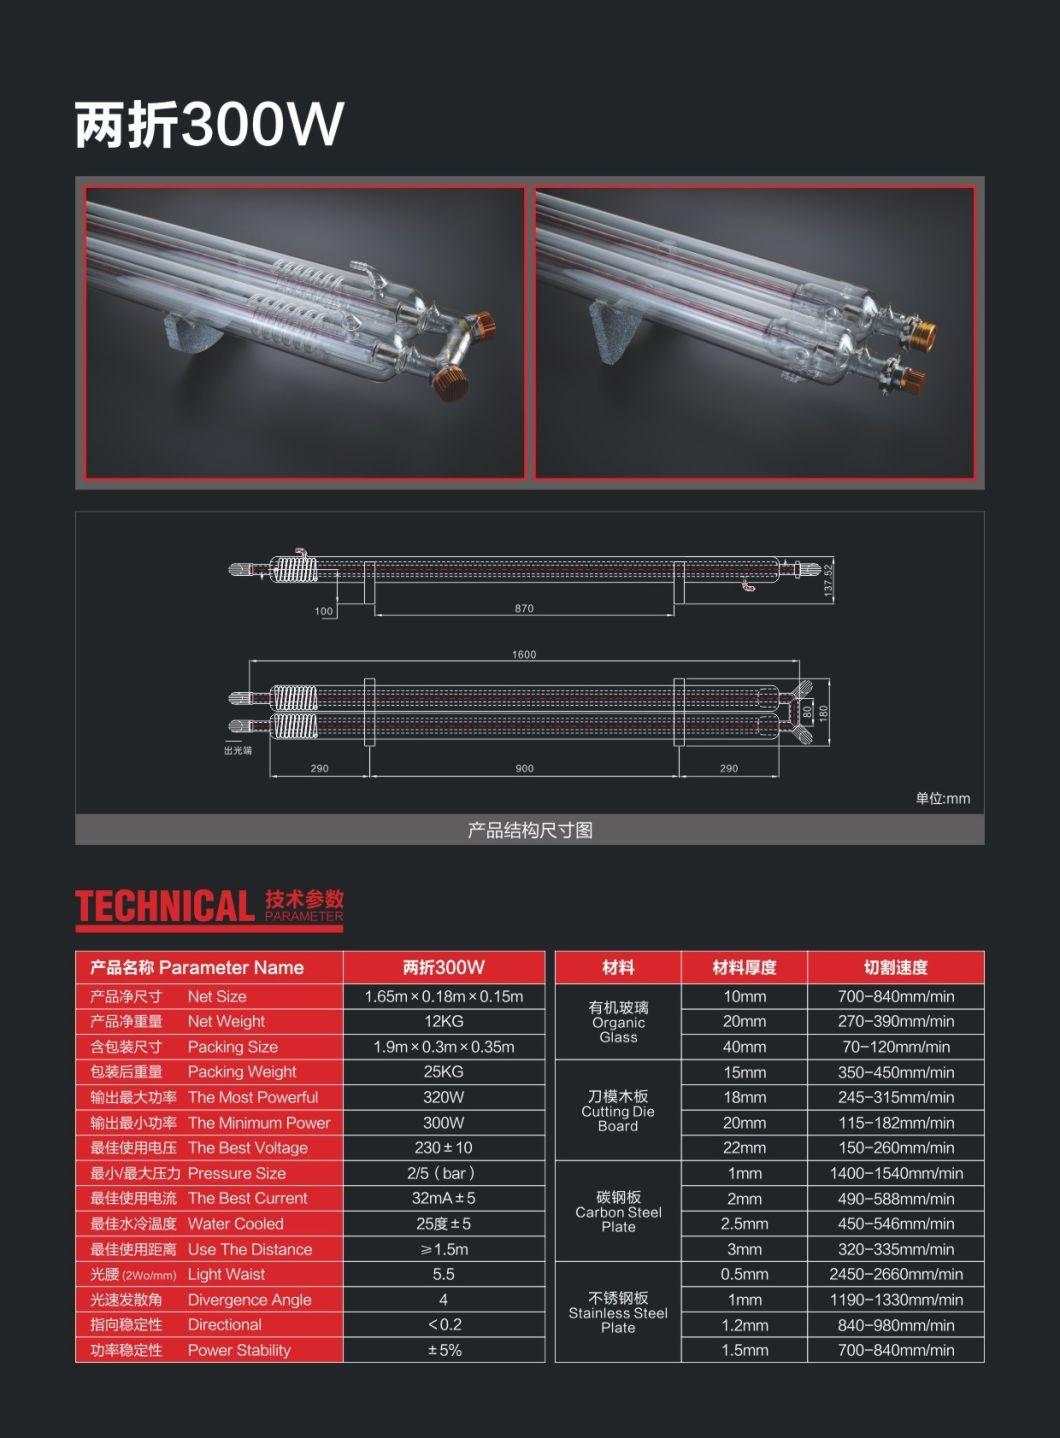 Medium Power 400W CO2 Laser Tube for Die-Cutter Cutting Machine, Laser Cut Machine, Cut Steel